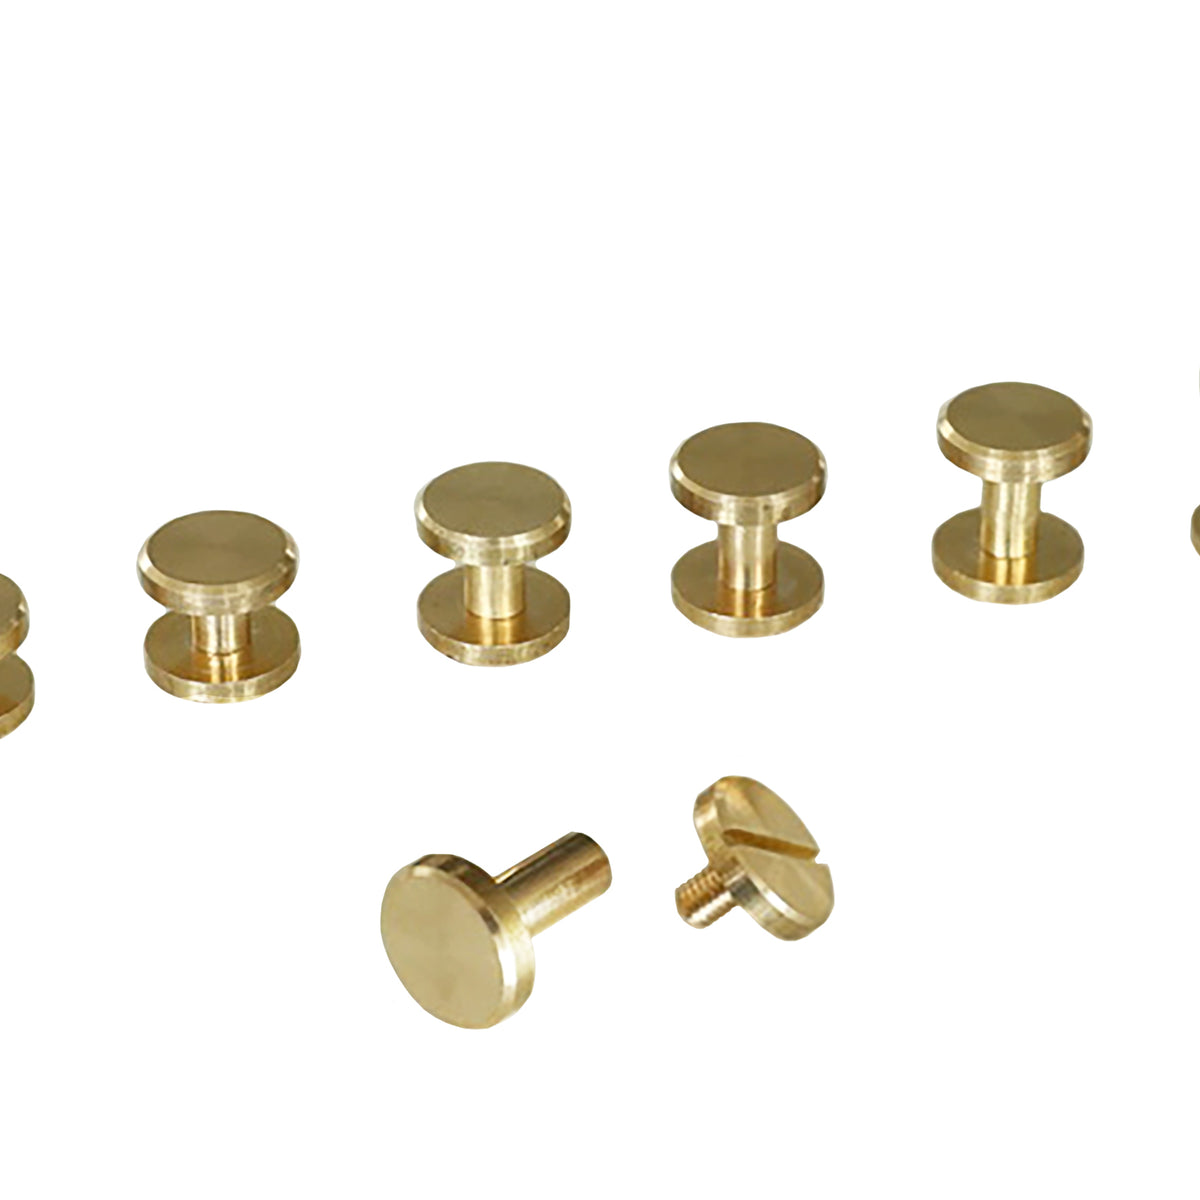 Buckleguy Solid Brass Chicago Screws for Leather, Belts, Handbags, Crafts & Accessories | Nickel Plate | 3/8 (CS7710-0G-NP-50)